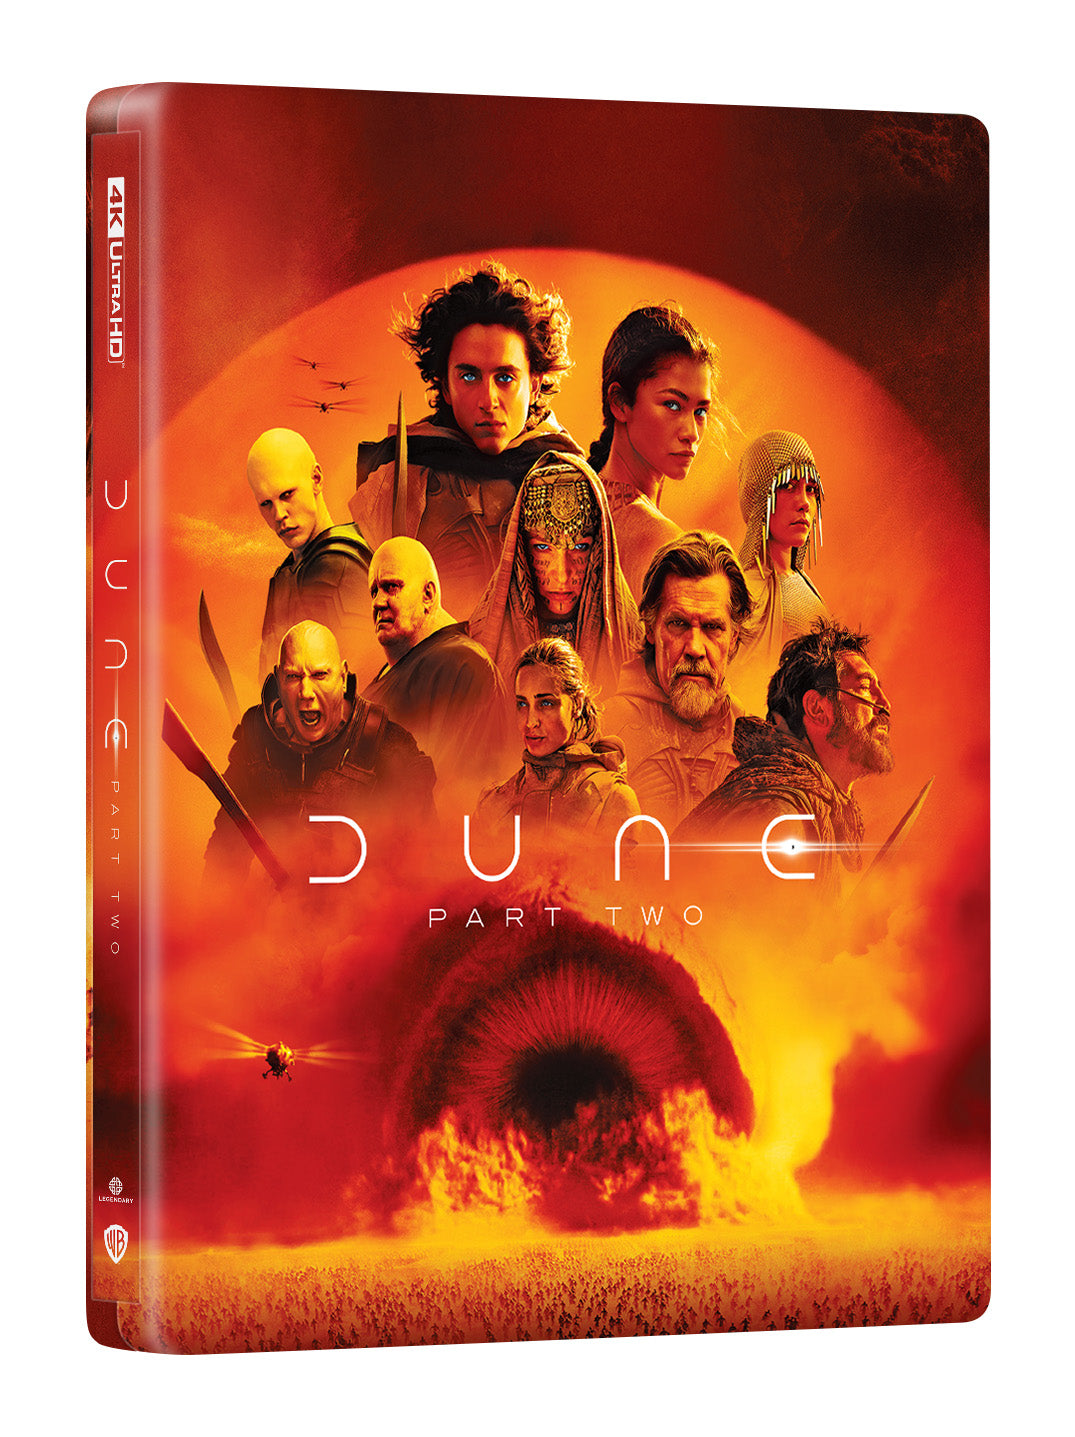 Dune: Part Two 4K Blu-ray Steelbook Manta Lab Exclusive ME#70 Double Lenticular Full Slip B - PREORDER